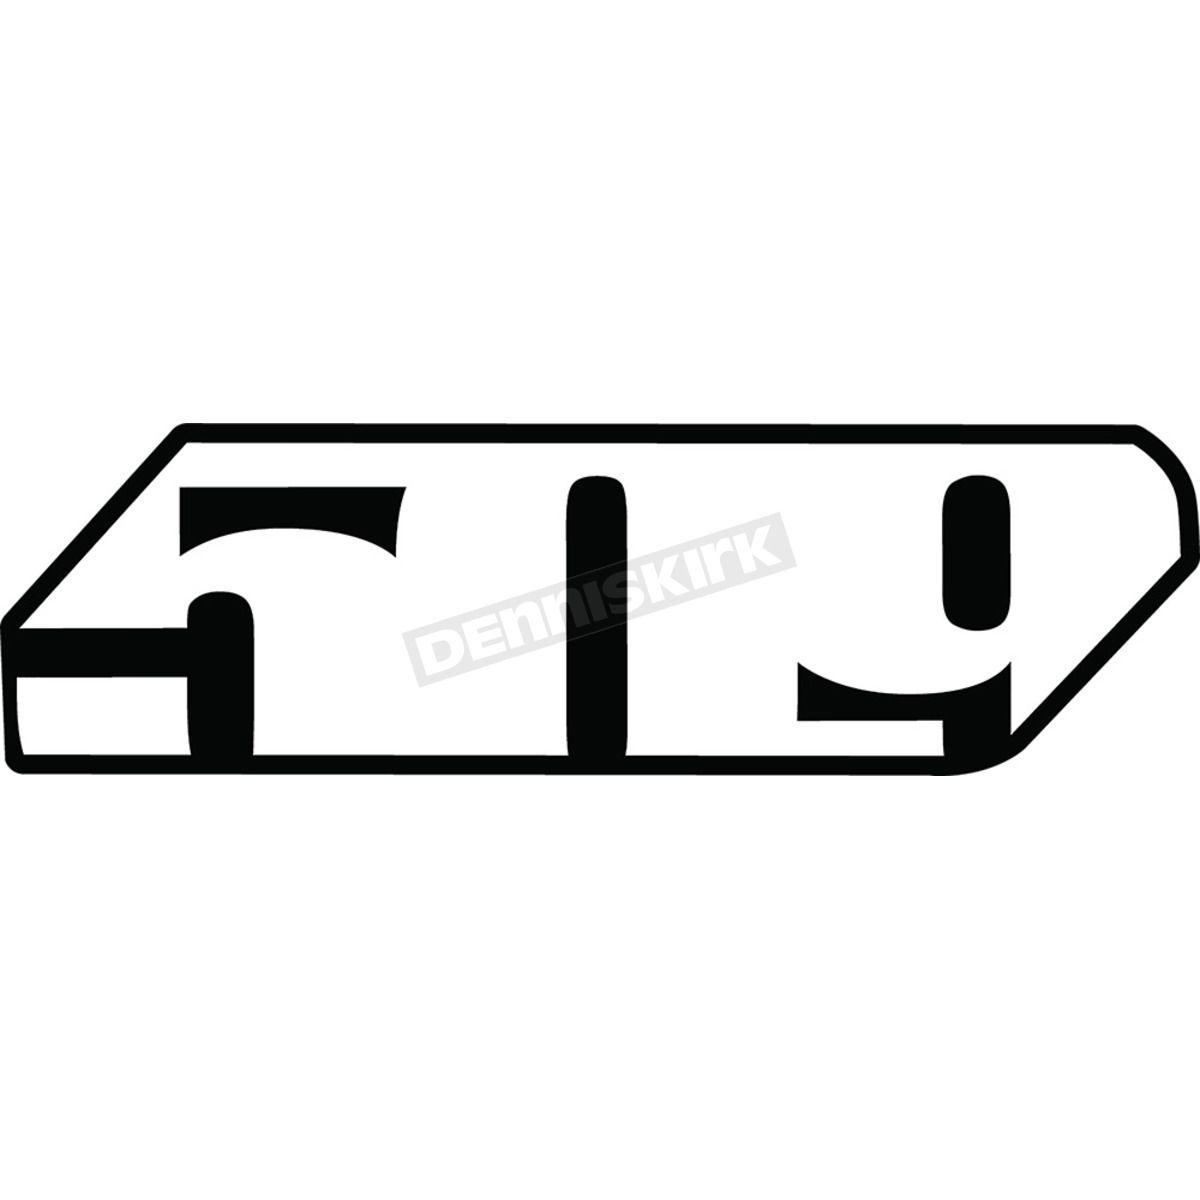 509 Logo - 24 in. Slash Logo Sticker - F13000100-024-002